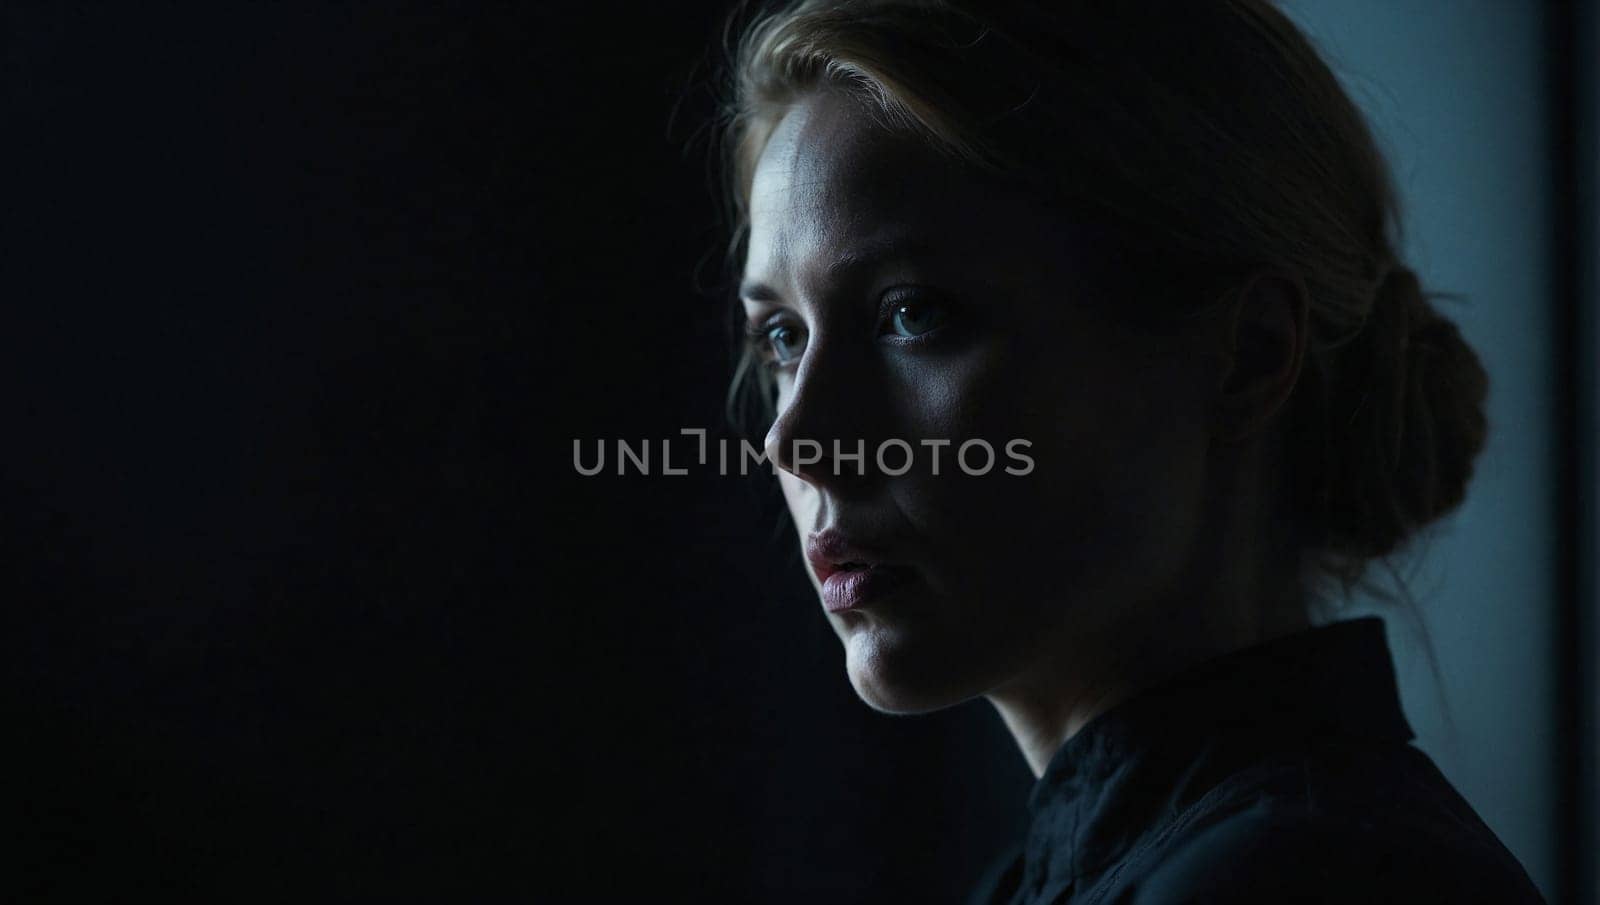 Dark silhouette of girl on dark background, concept by stan111